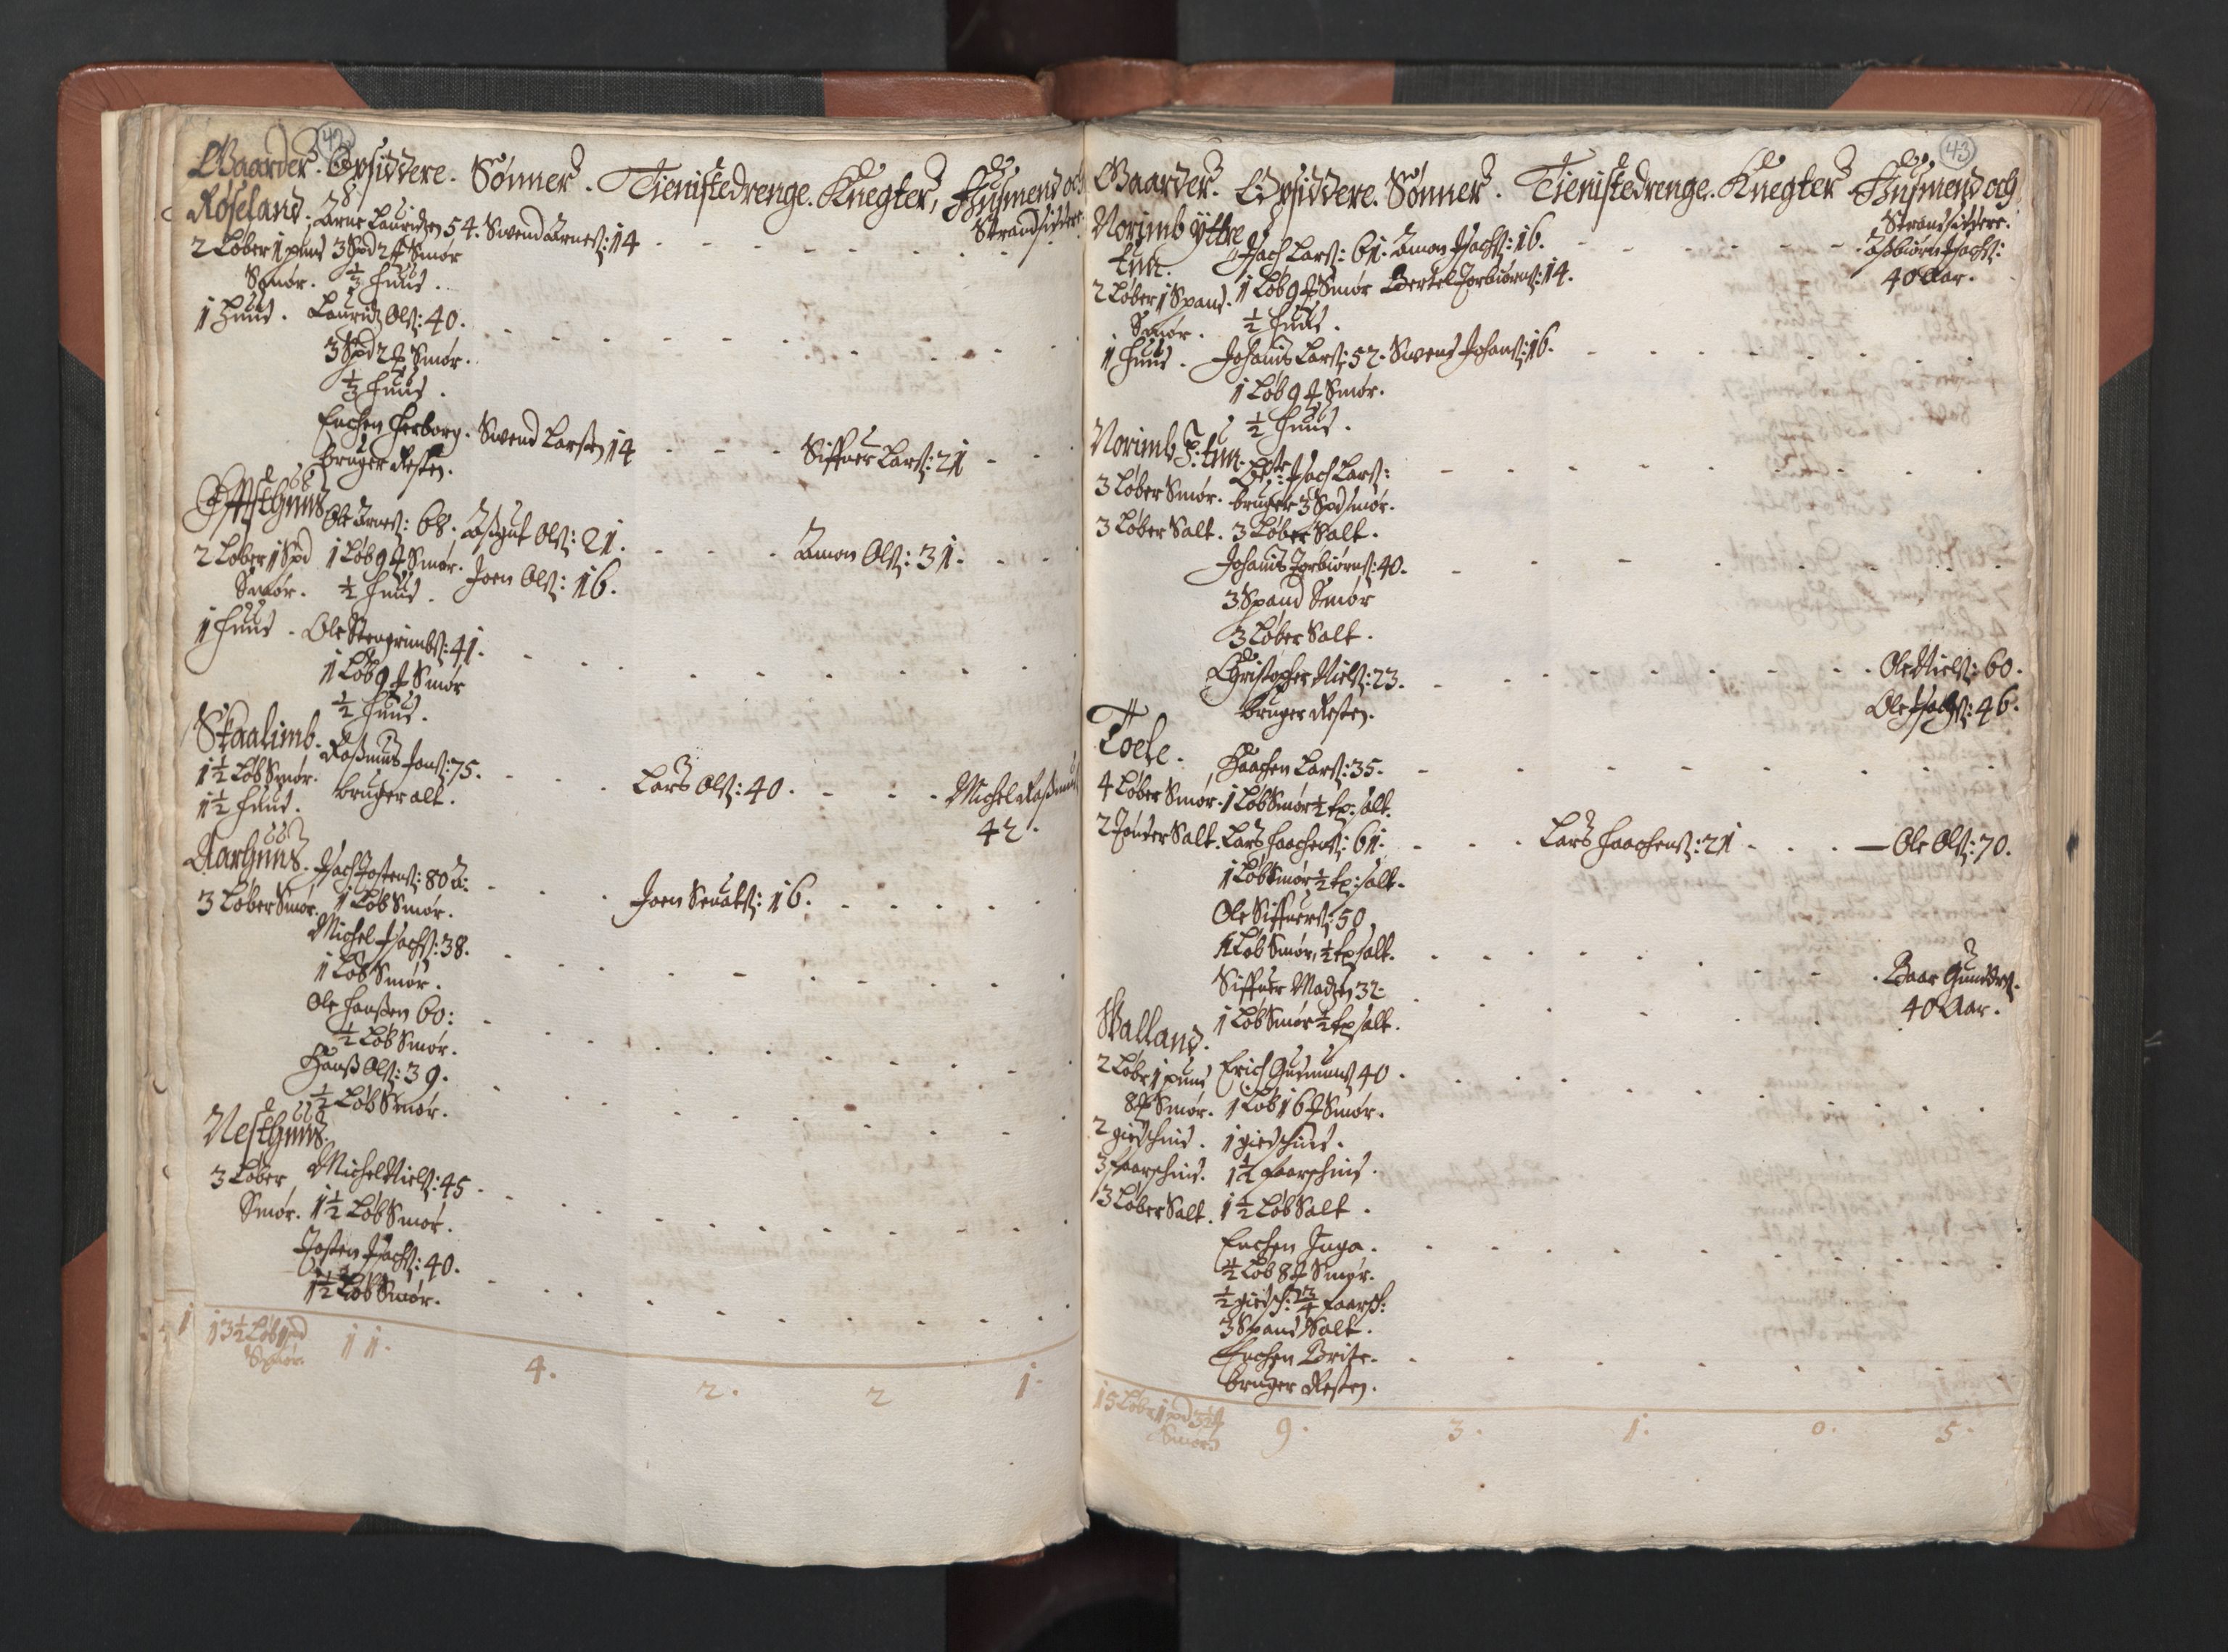 RA, Fogdenes og sorenskrivernes manntall 1664-1666, nr. 14: Hardanger len, Ytre Sogn fogderi og Indre Sogn fogderi, 1664-1665, s. 42-43